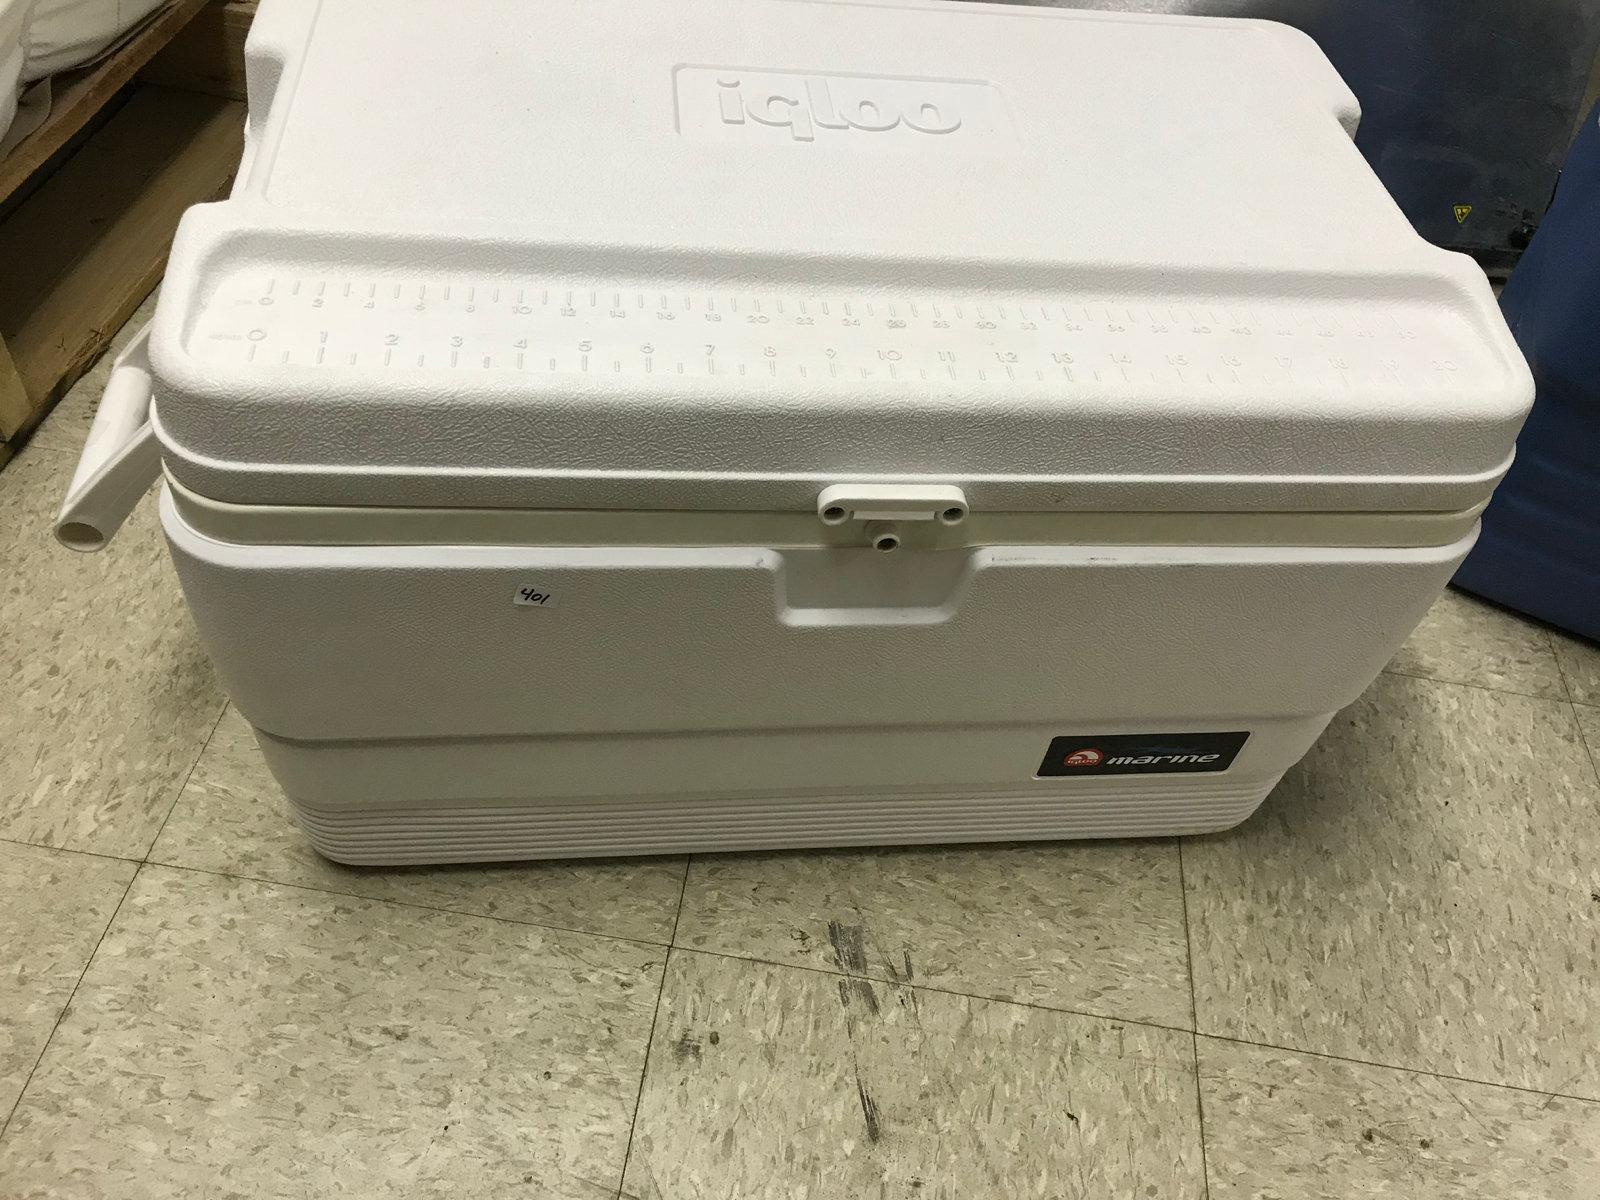 Igloo 54 quart cooler, needs hinges replaced